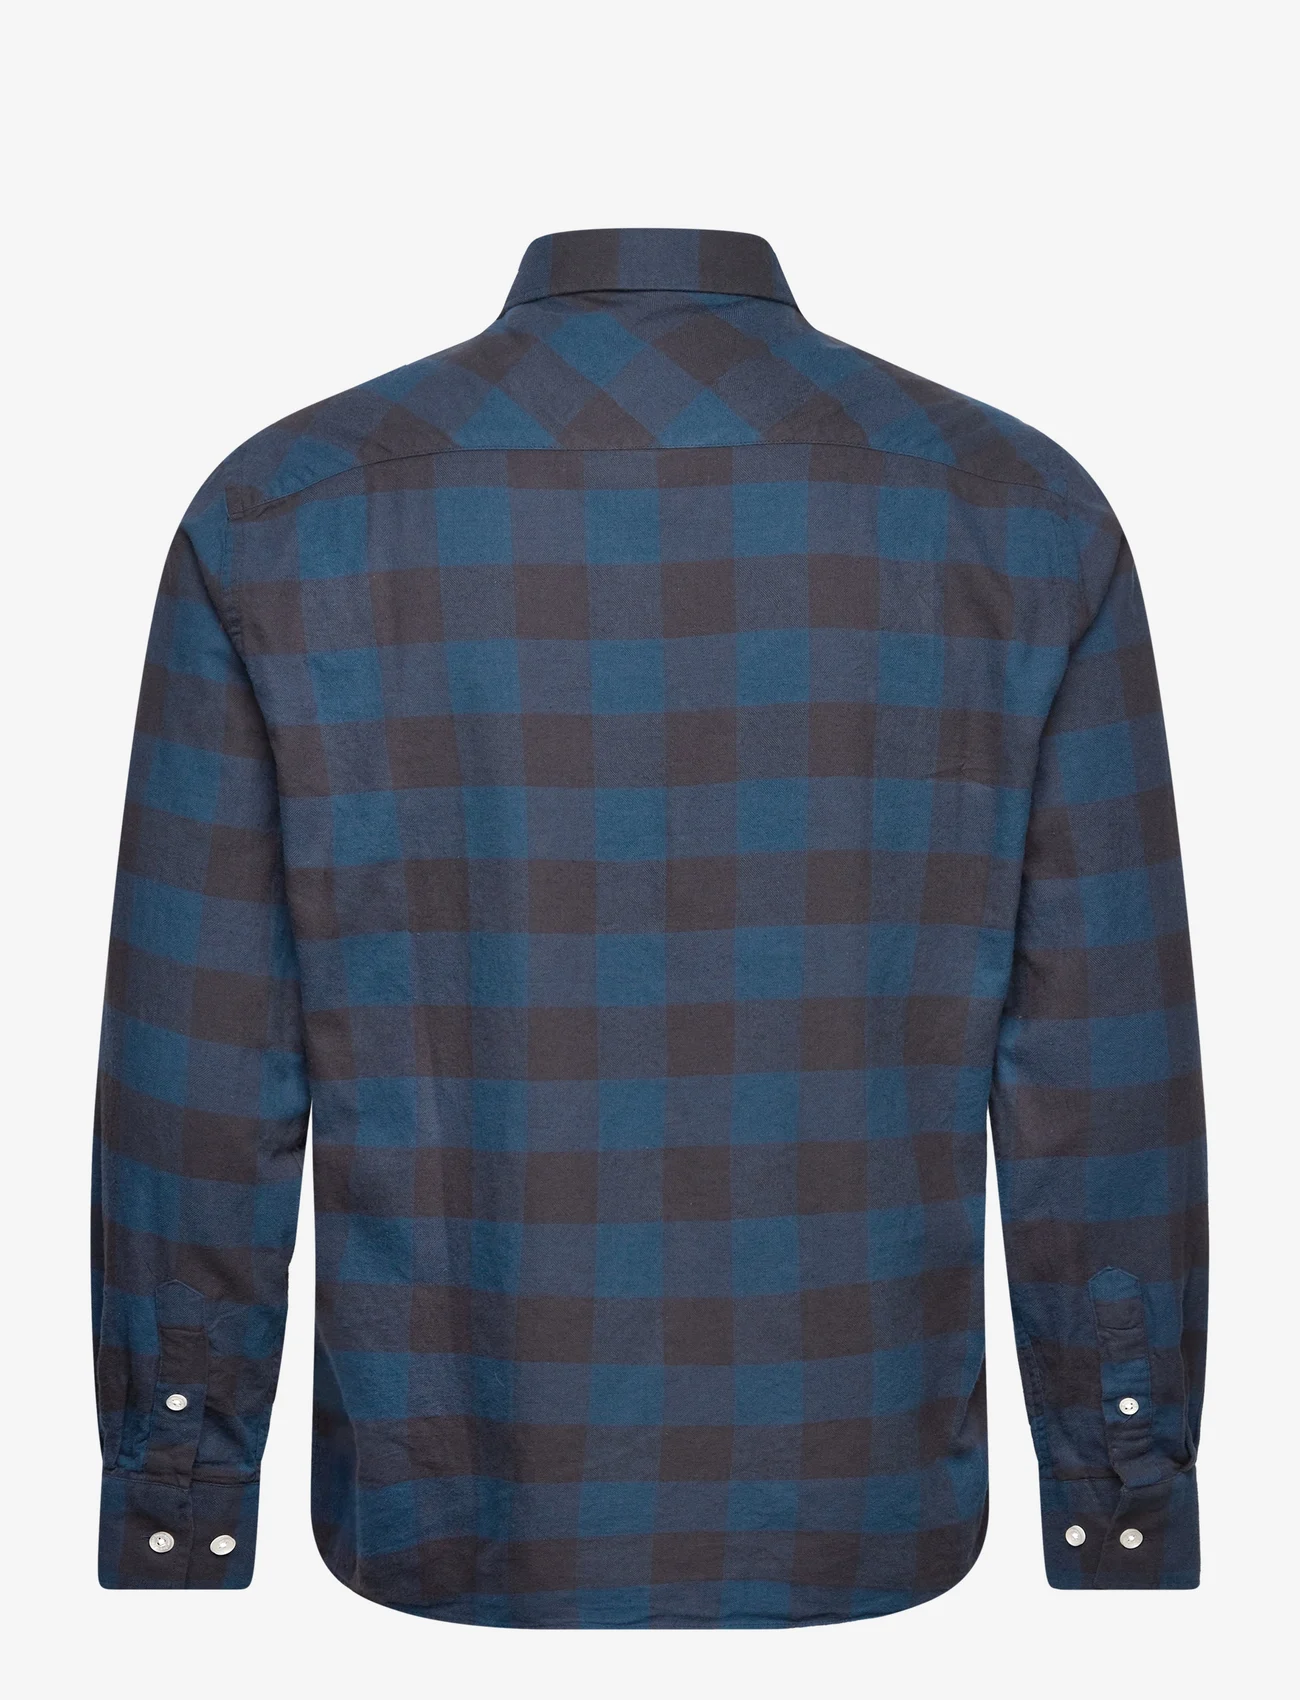 Armor Lux - Check Shirt Héritage - checkered shirts - carreaux fondu marine deep - 1